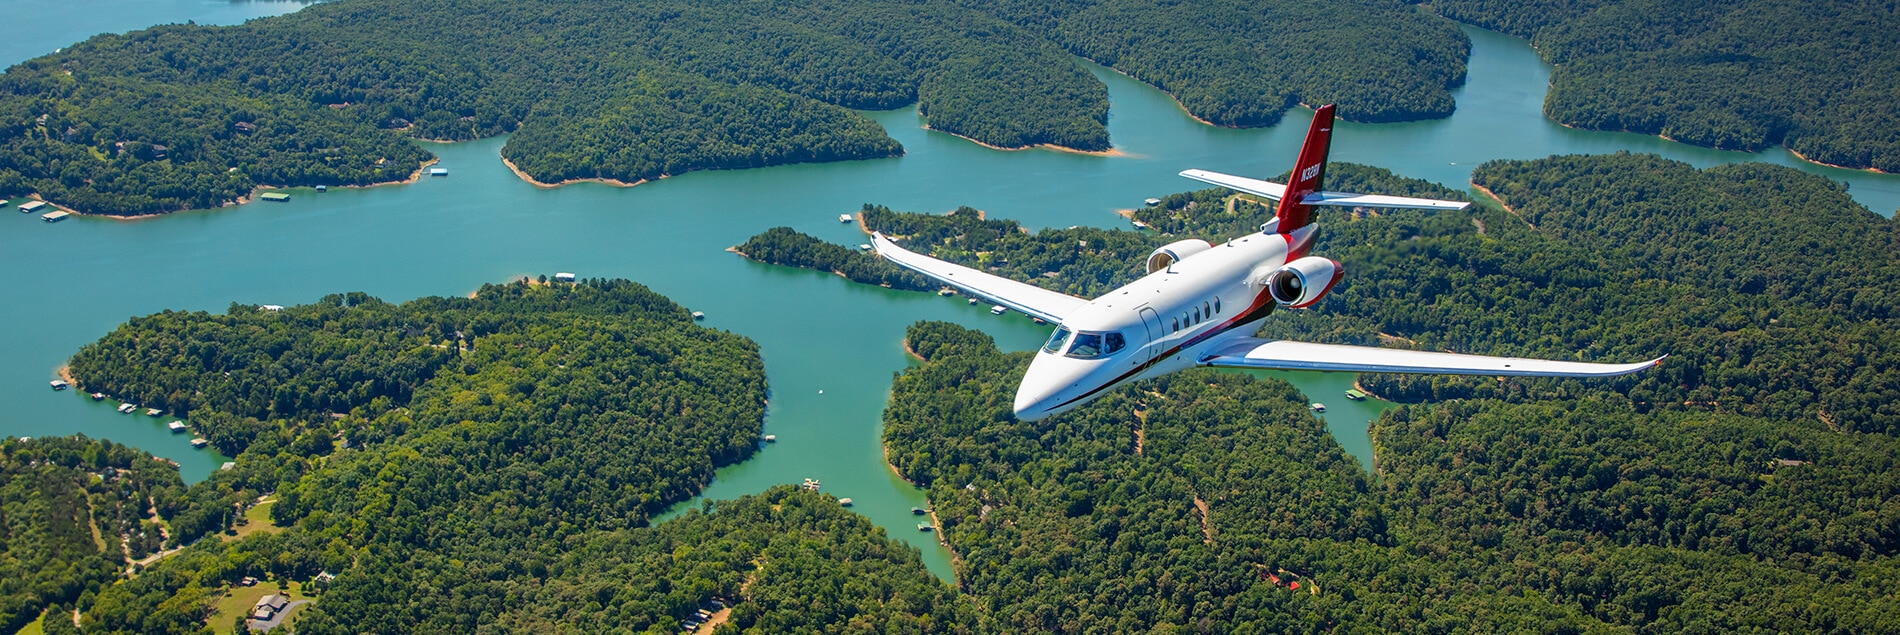 Cessna Citation Latitude over Water